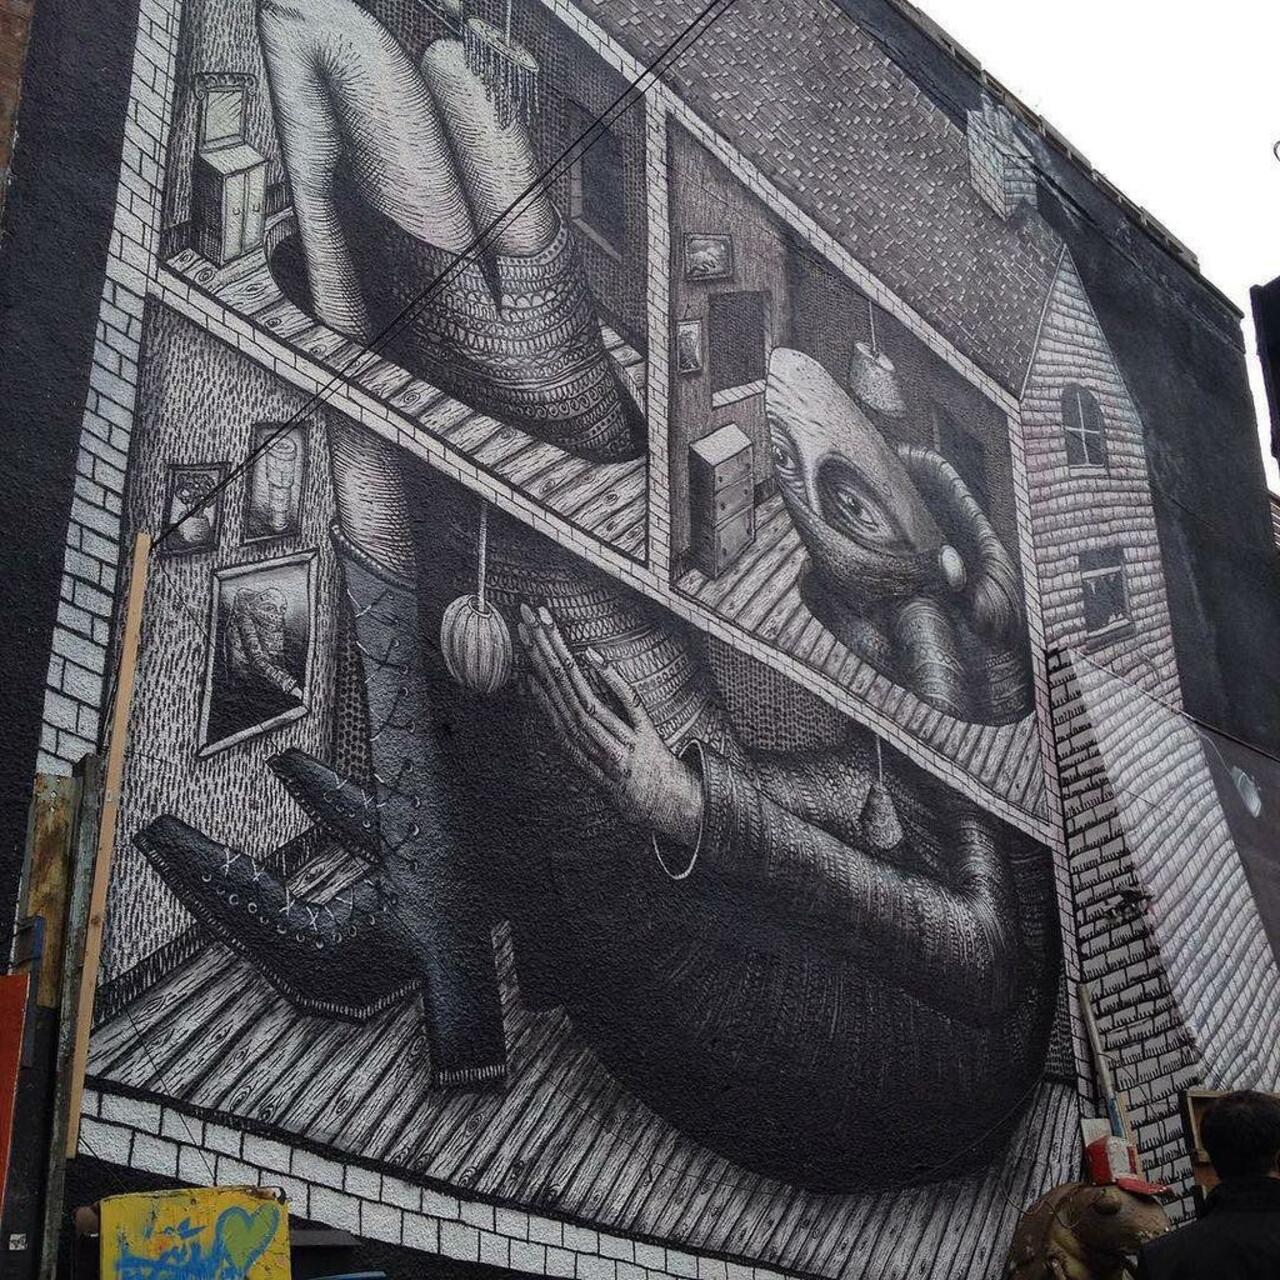 So happy to see @phlegm_art #streetart #streetartlondon #graffiti #london #thisislondon by isadarko http://t.co/ttYUEWtMU2